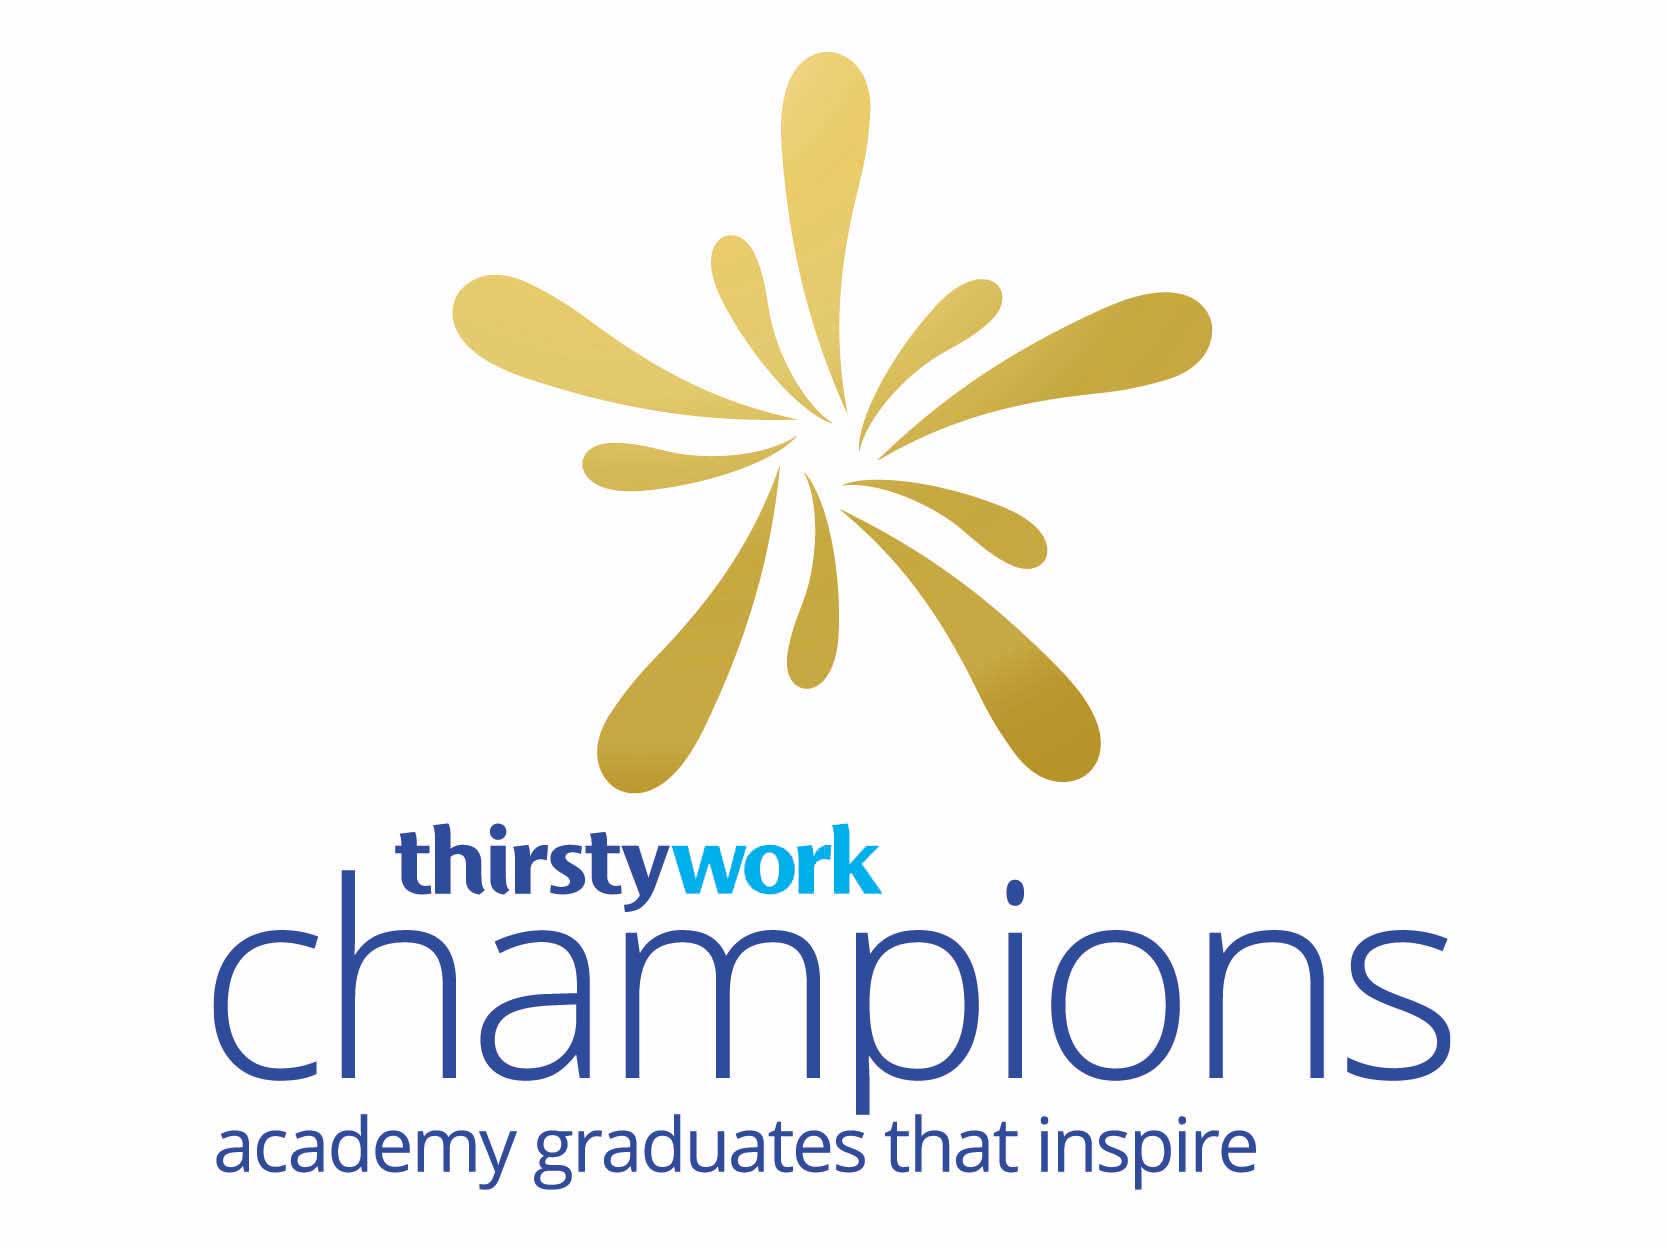 thirstywork champions logo